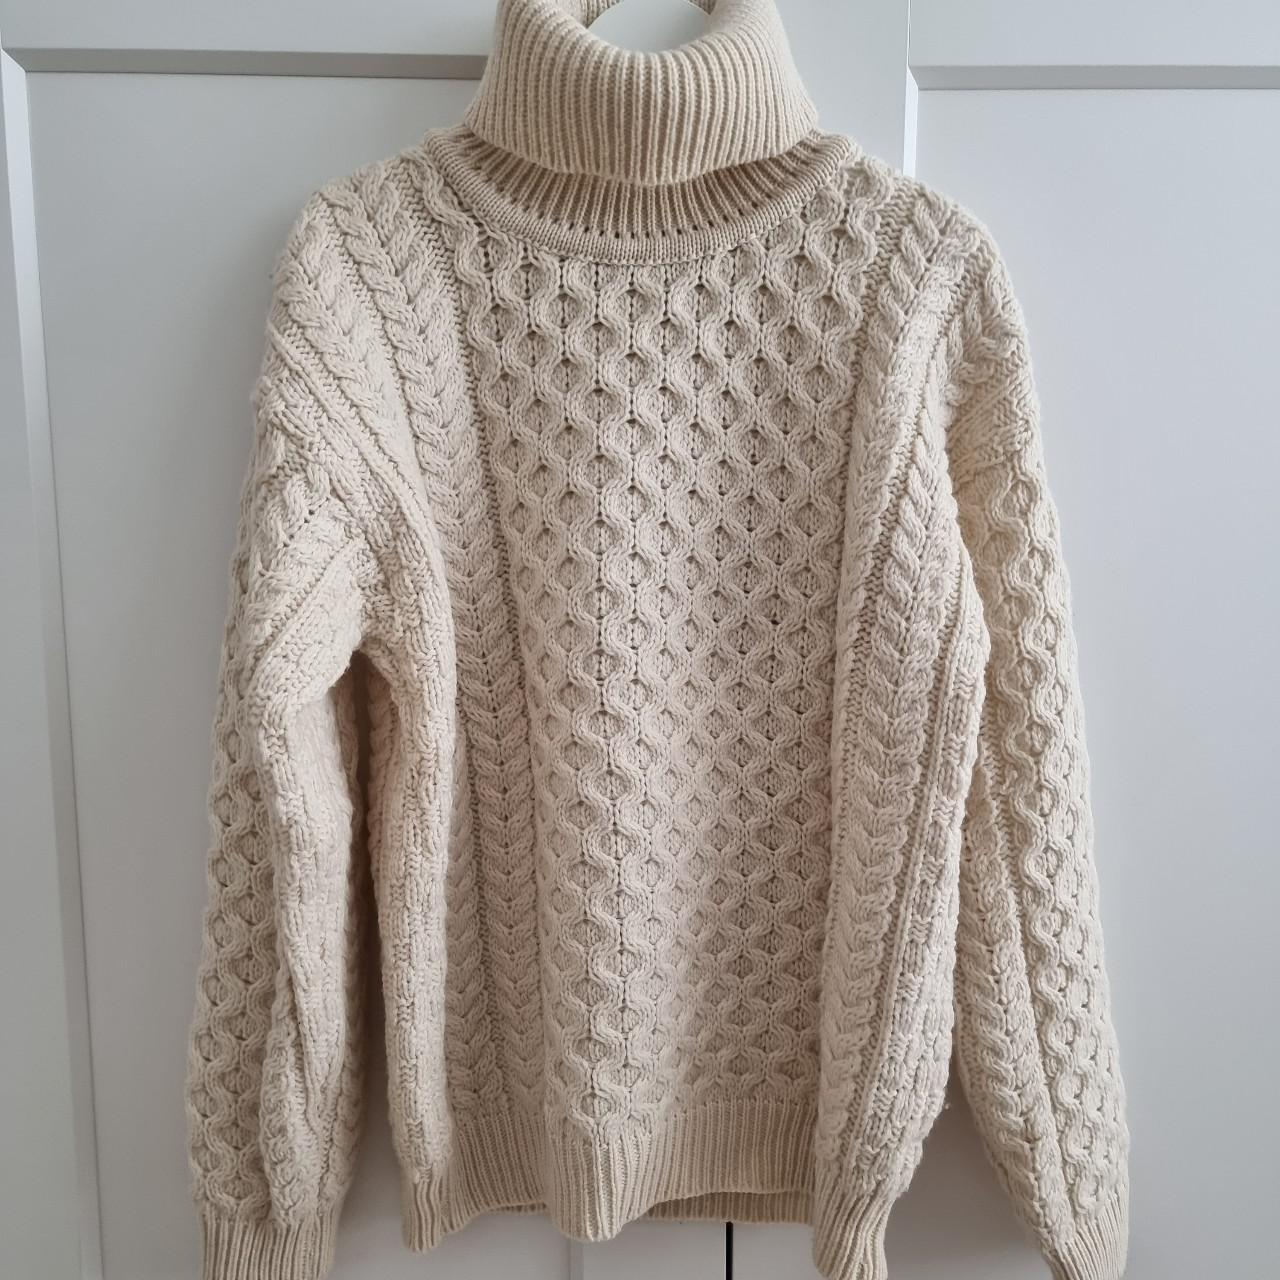 Aran chuncky merino wool jumper from Aran Sweater... - Depop